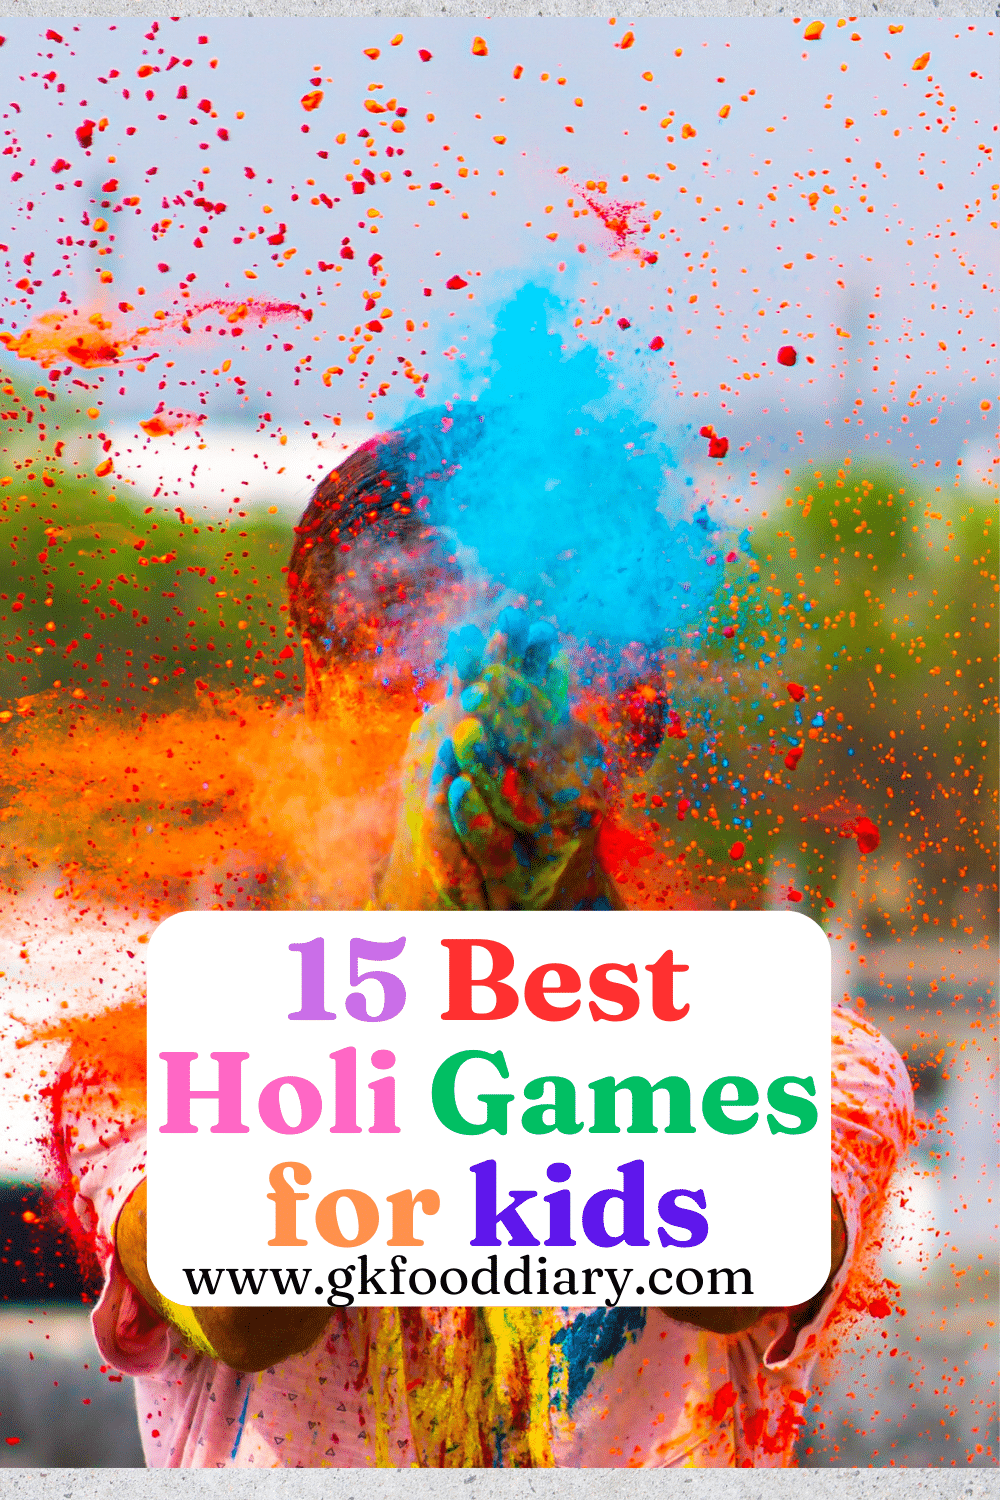 15 Best Holi Games for kids